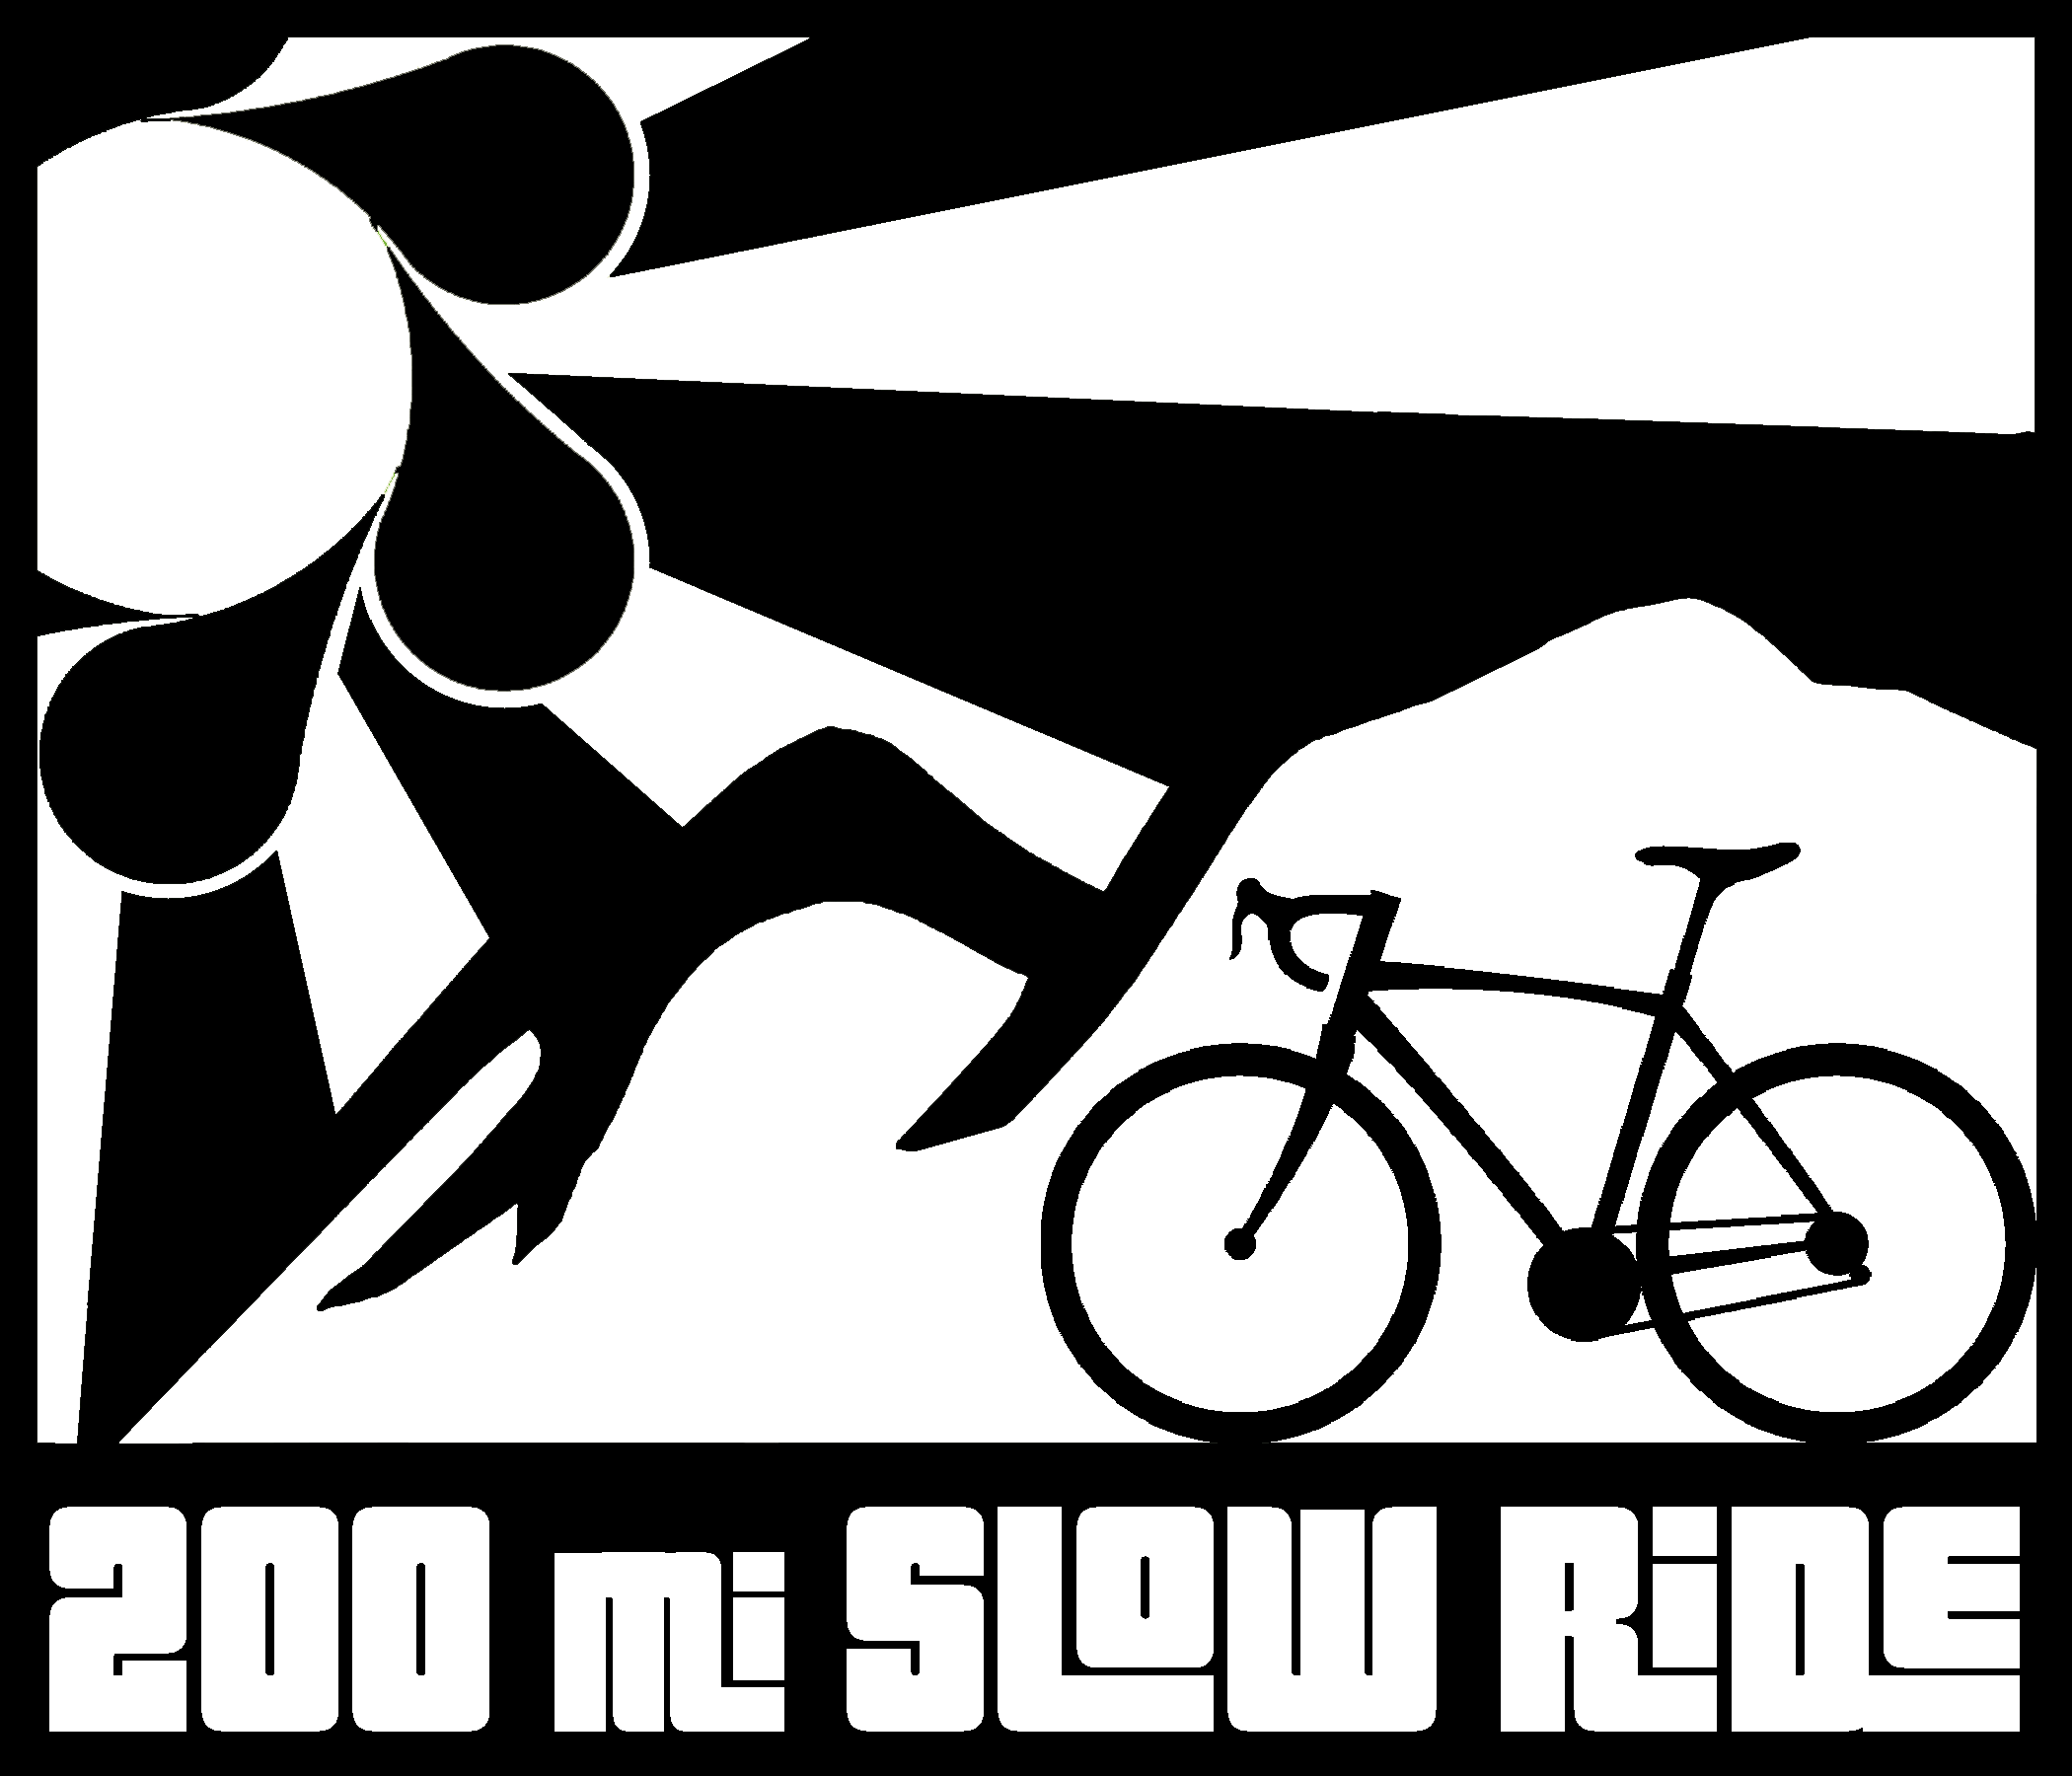 Slow Ride